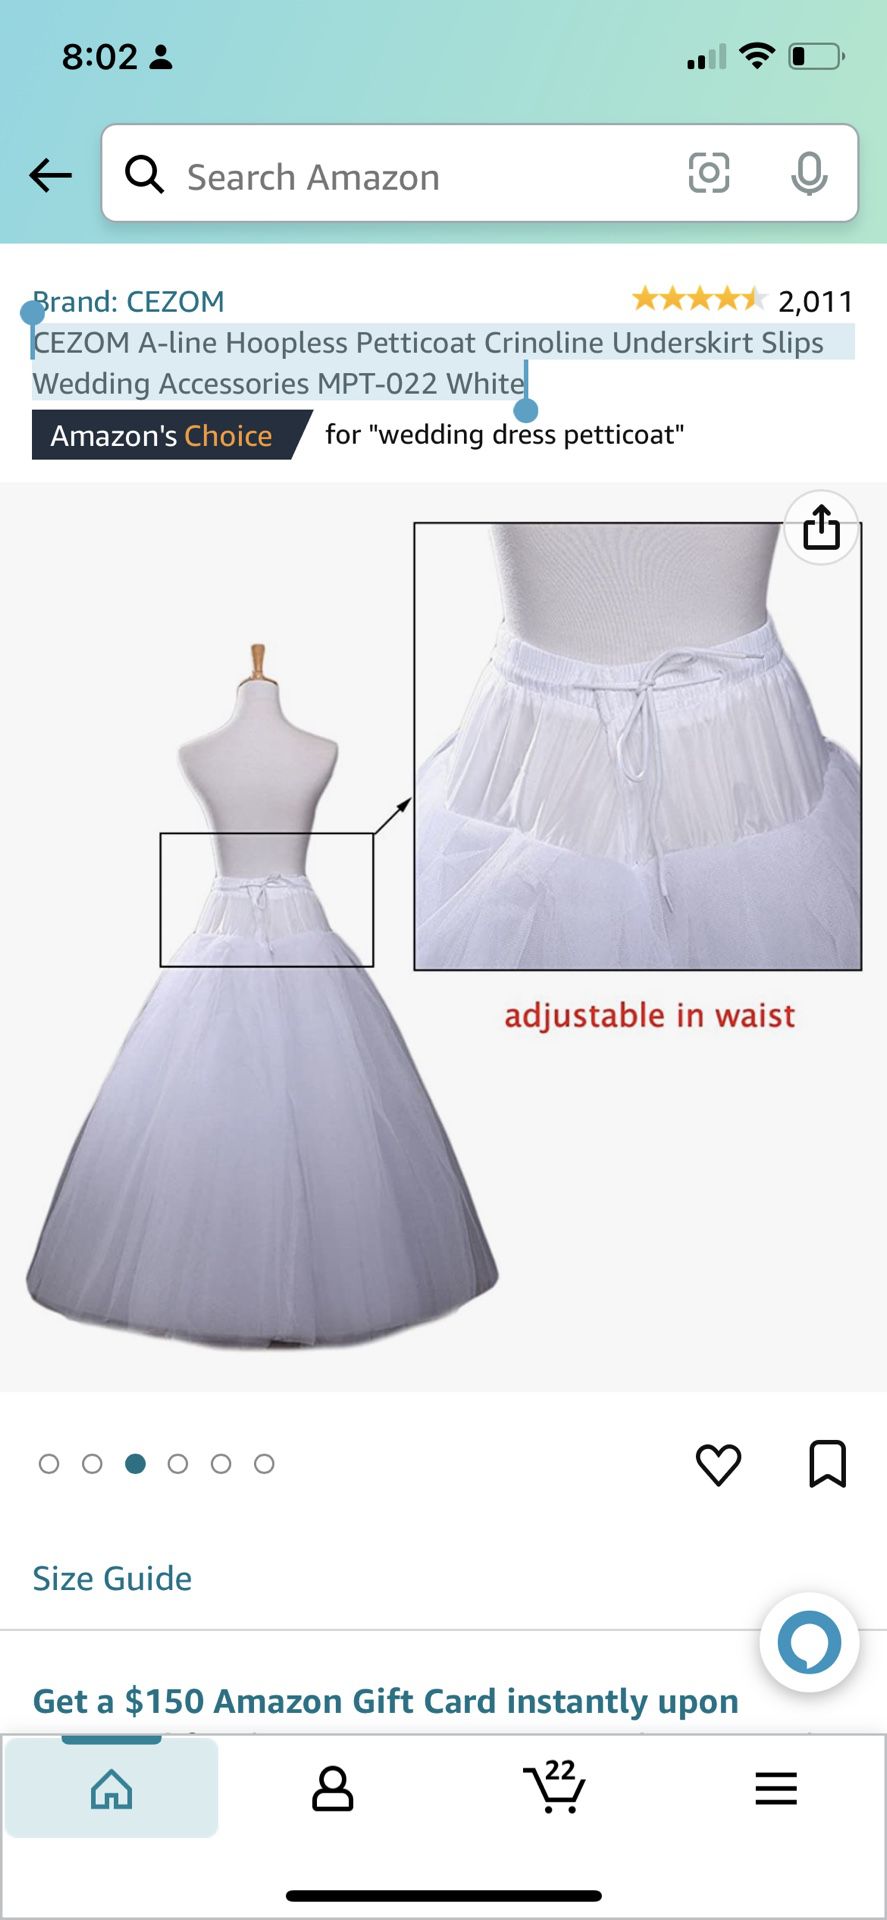 CEZOM A-line Hoopless Petticoat Crinoline Underskirt Slips Wedding Accessories MPT-022 White